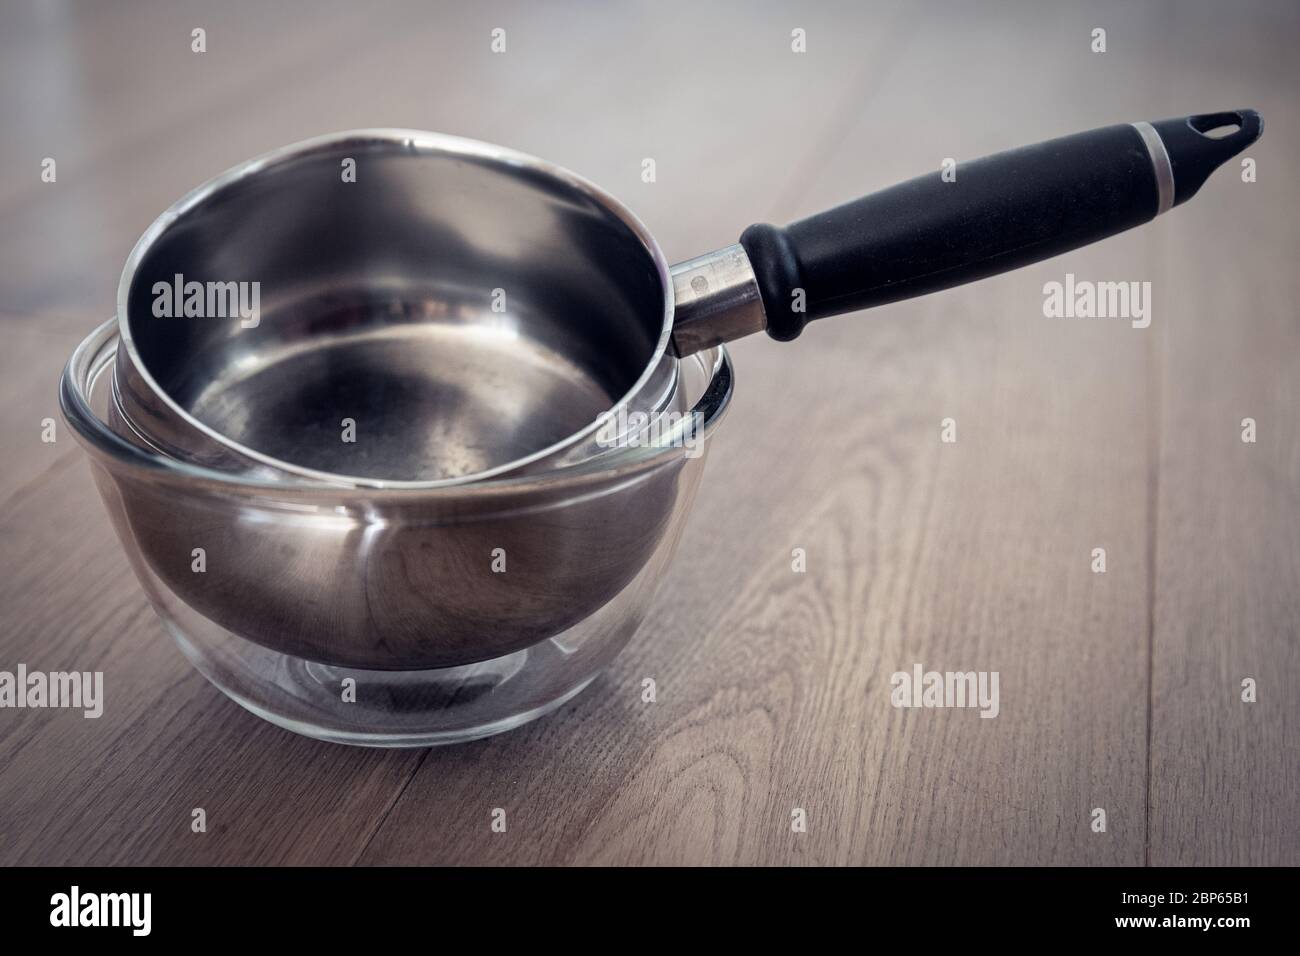 A silver saucepan in a glass bowl Stock Photo